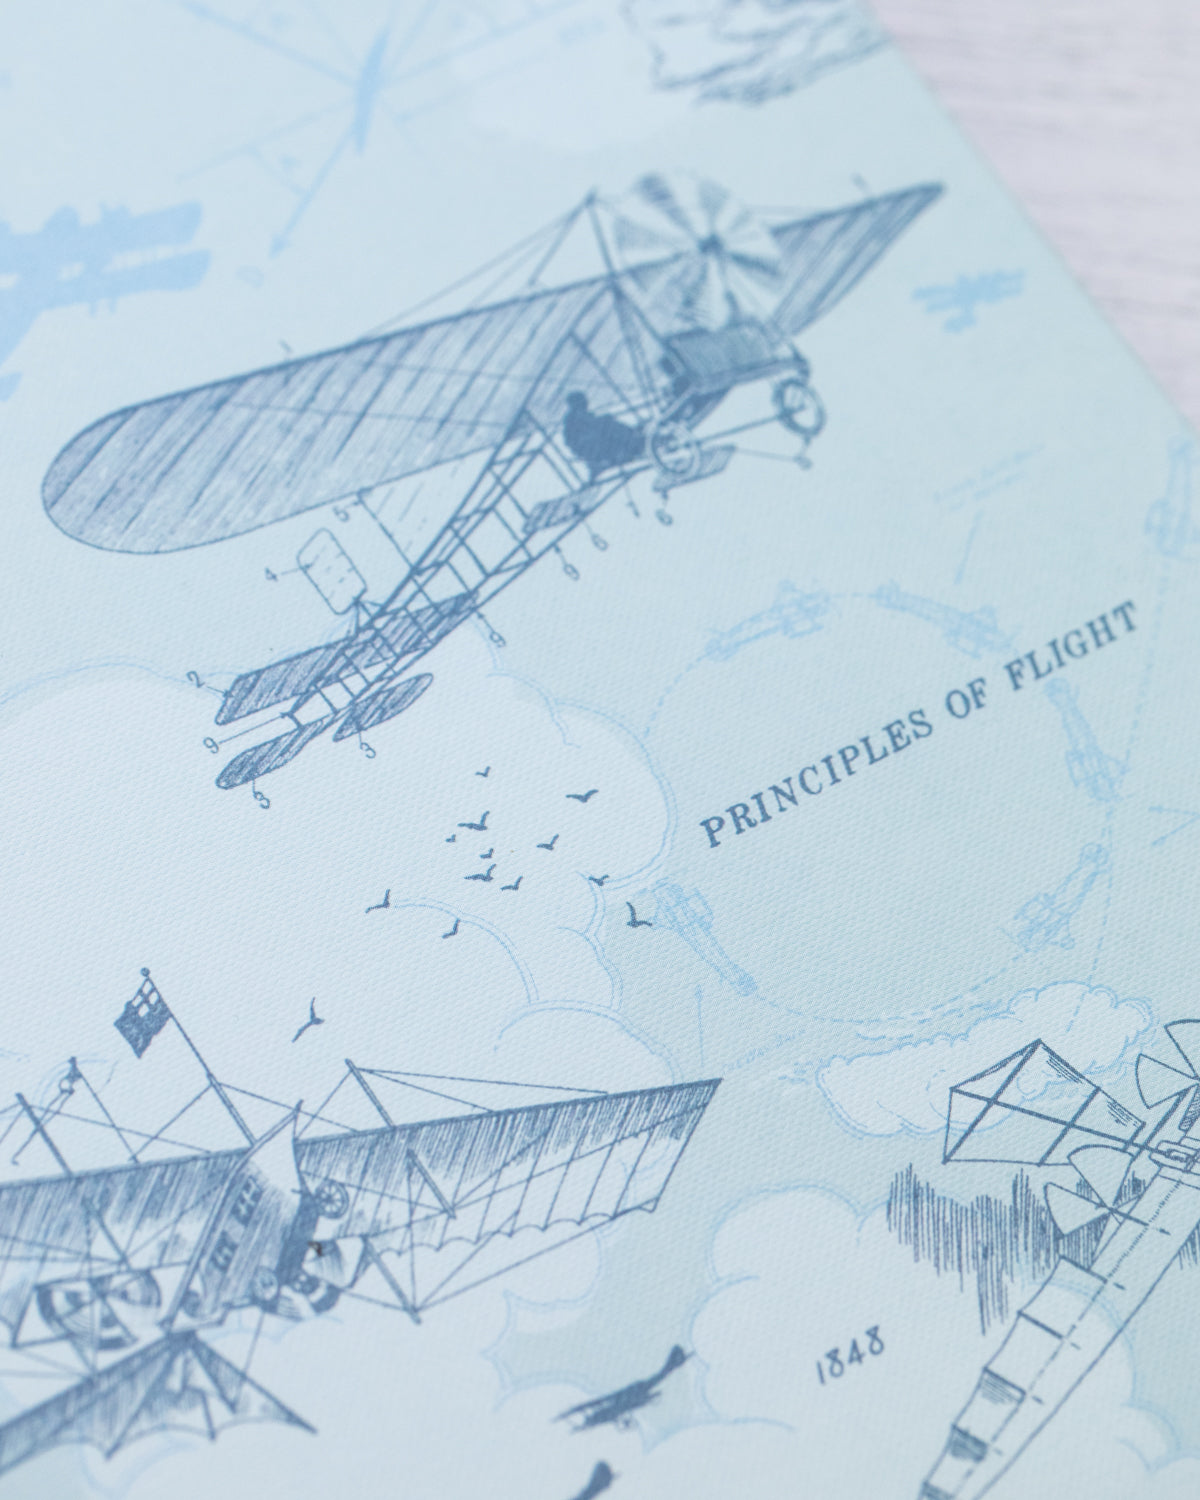 Aviation Early Flight Hardcover - Dot Grid